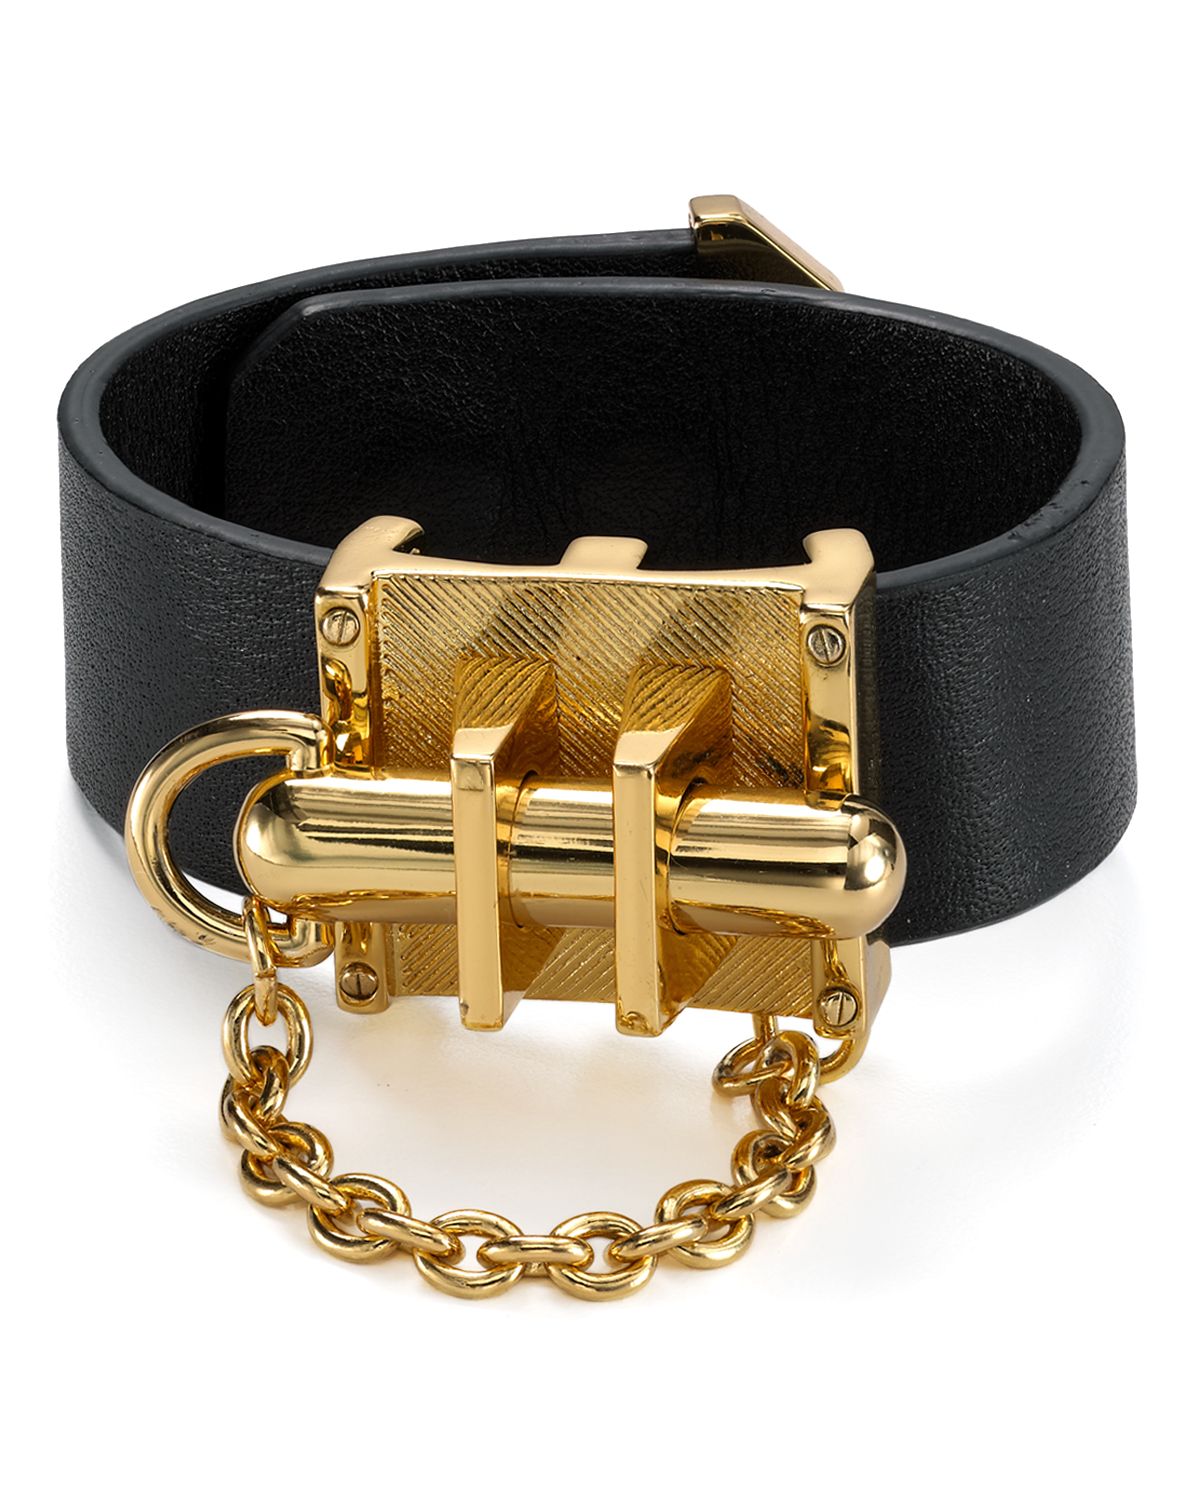 Lyst - Rachel Zoe Leather Signature Bracelet in Black